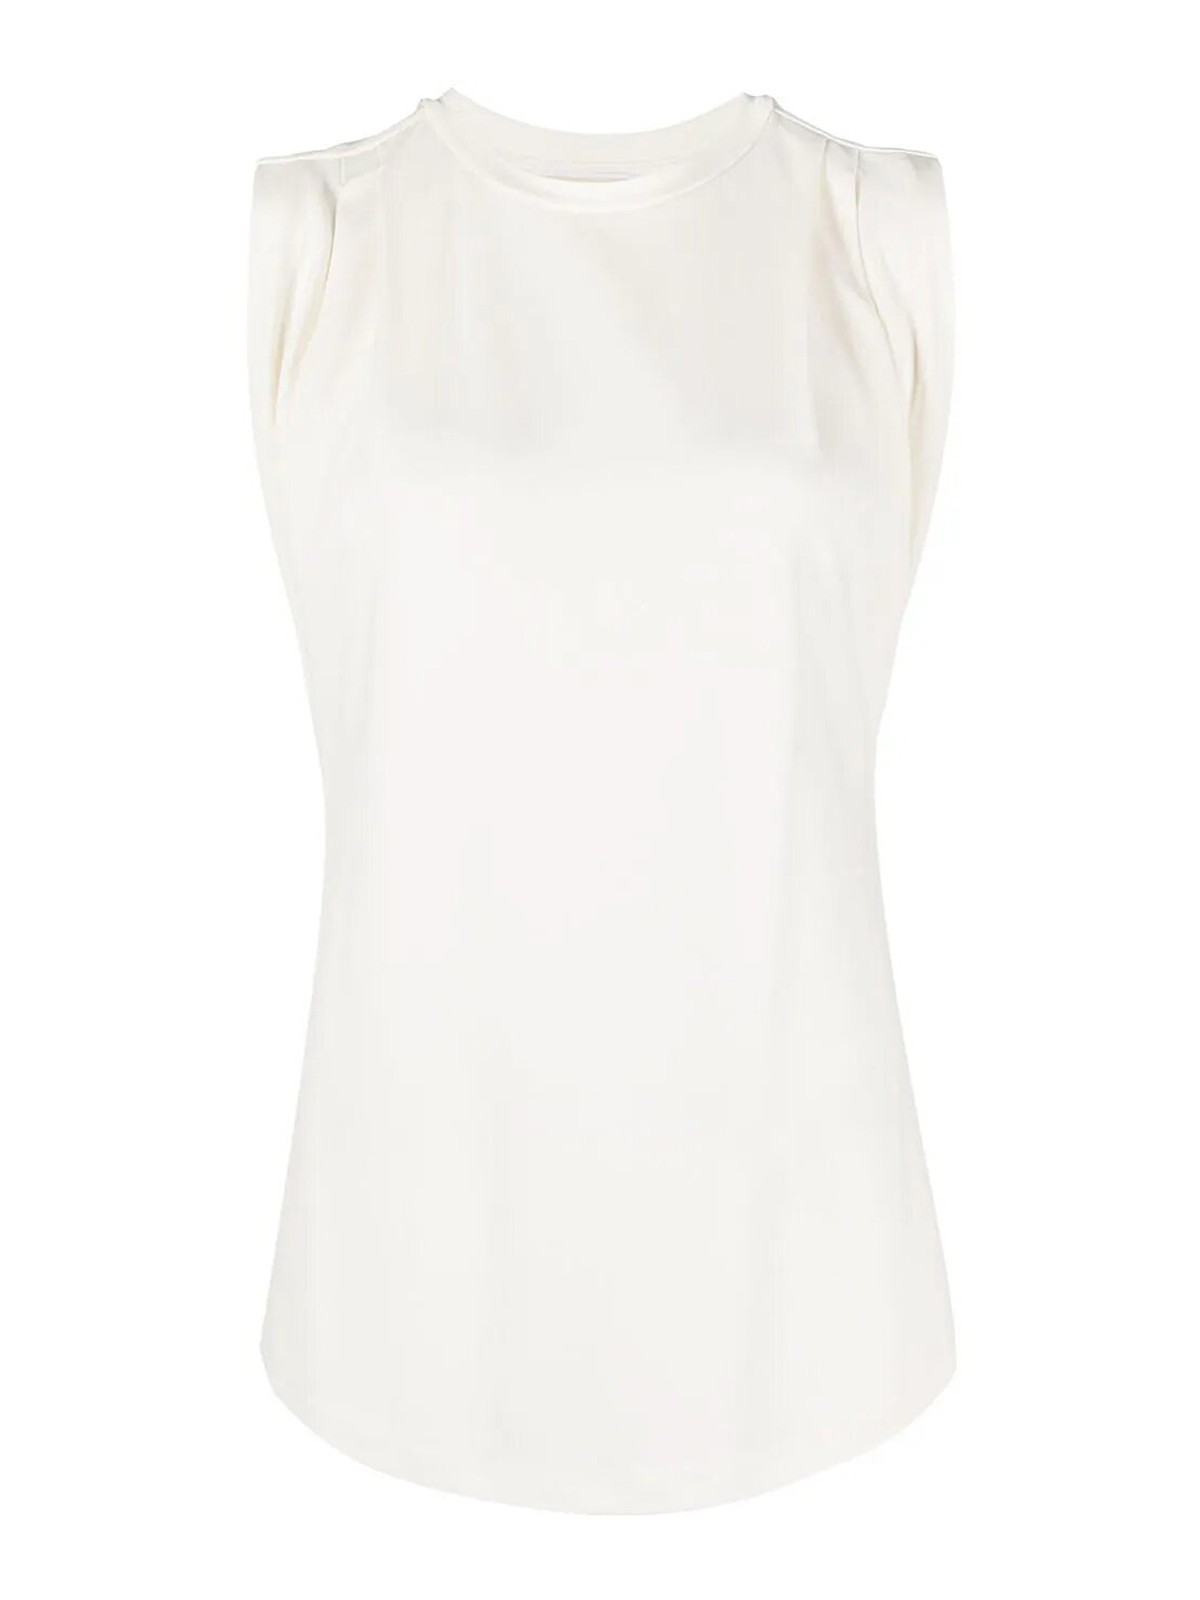 Shop Michael Kors Top - Blanco In White